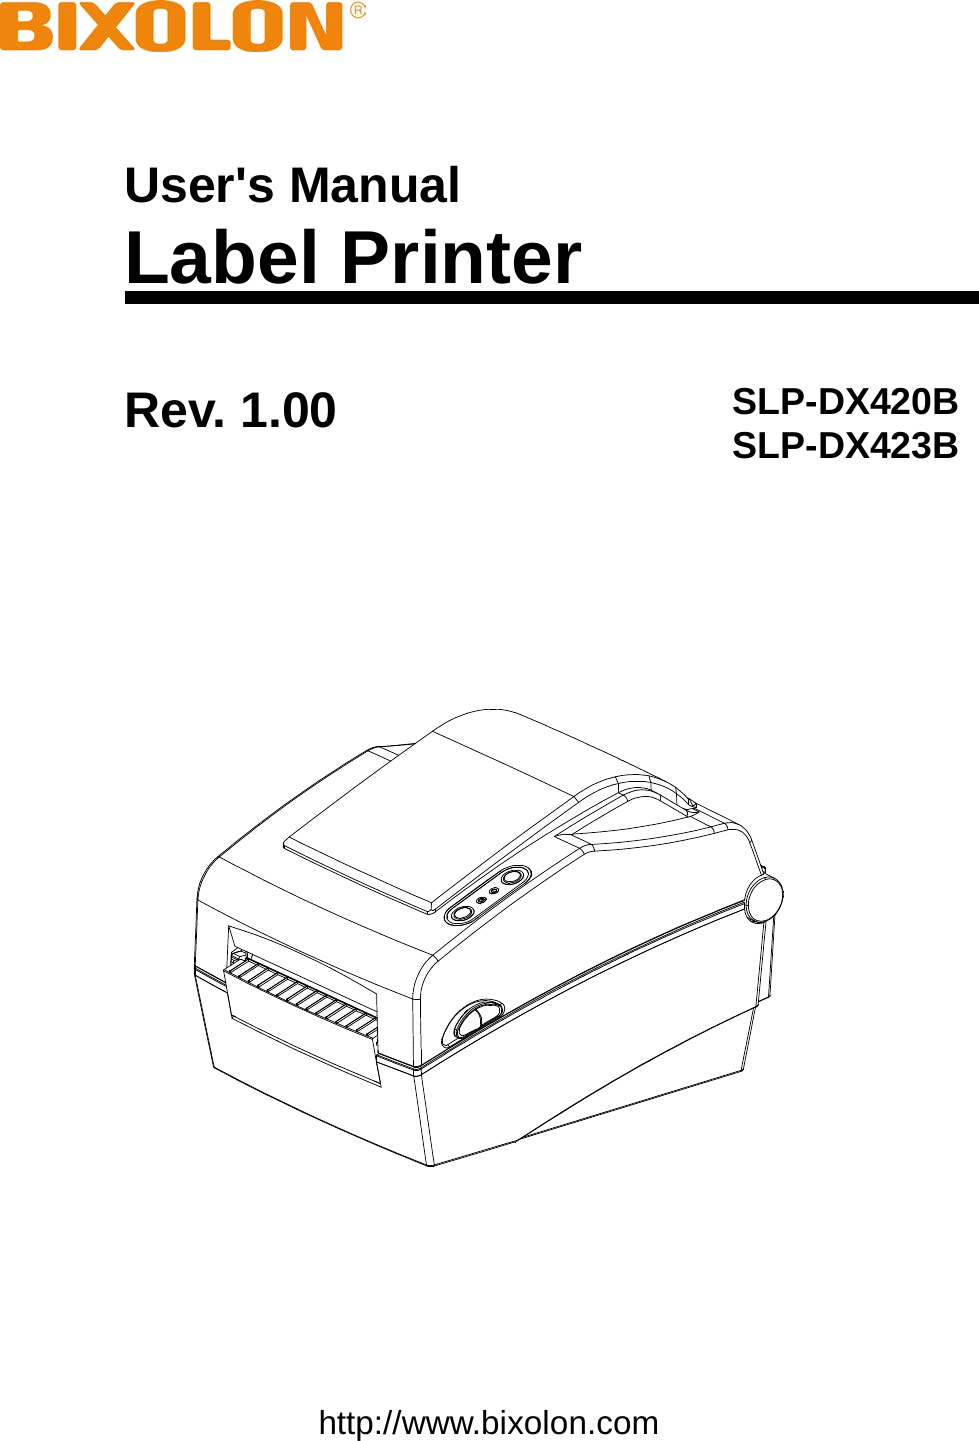       User&apos;s Manual Label Printer Rev. 1.00 SLP-DX420B SLP-DX423B     http://www.bixolon.com 